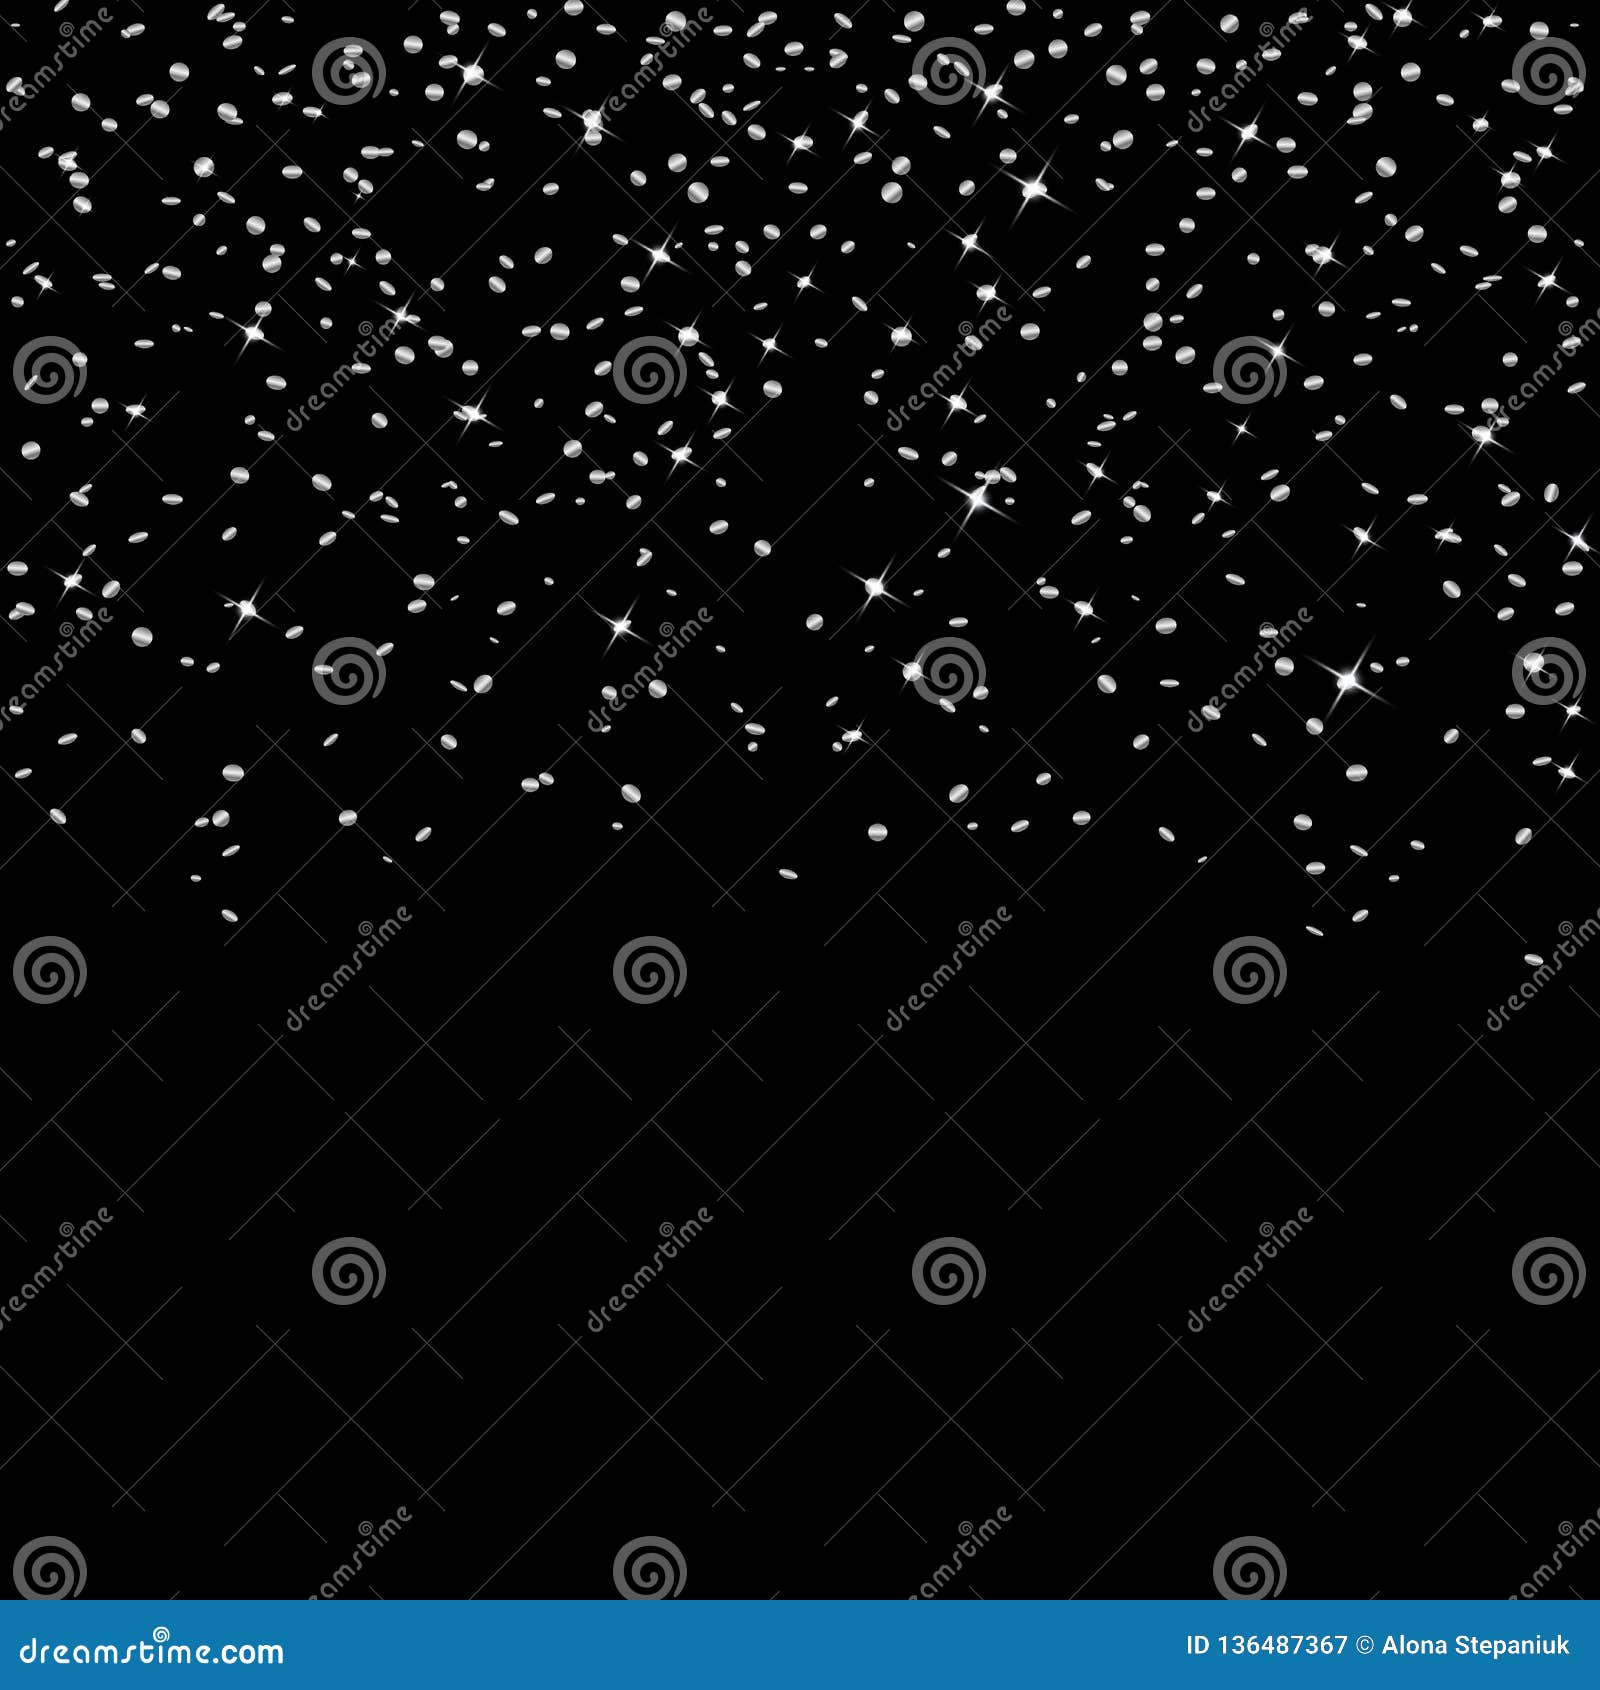 Silver confetti background stock vector. Illustration of colorful